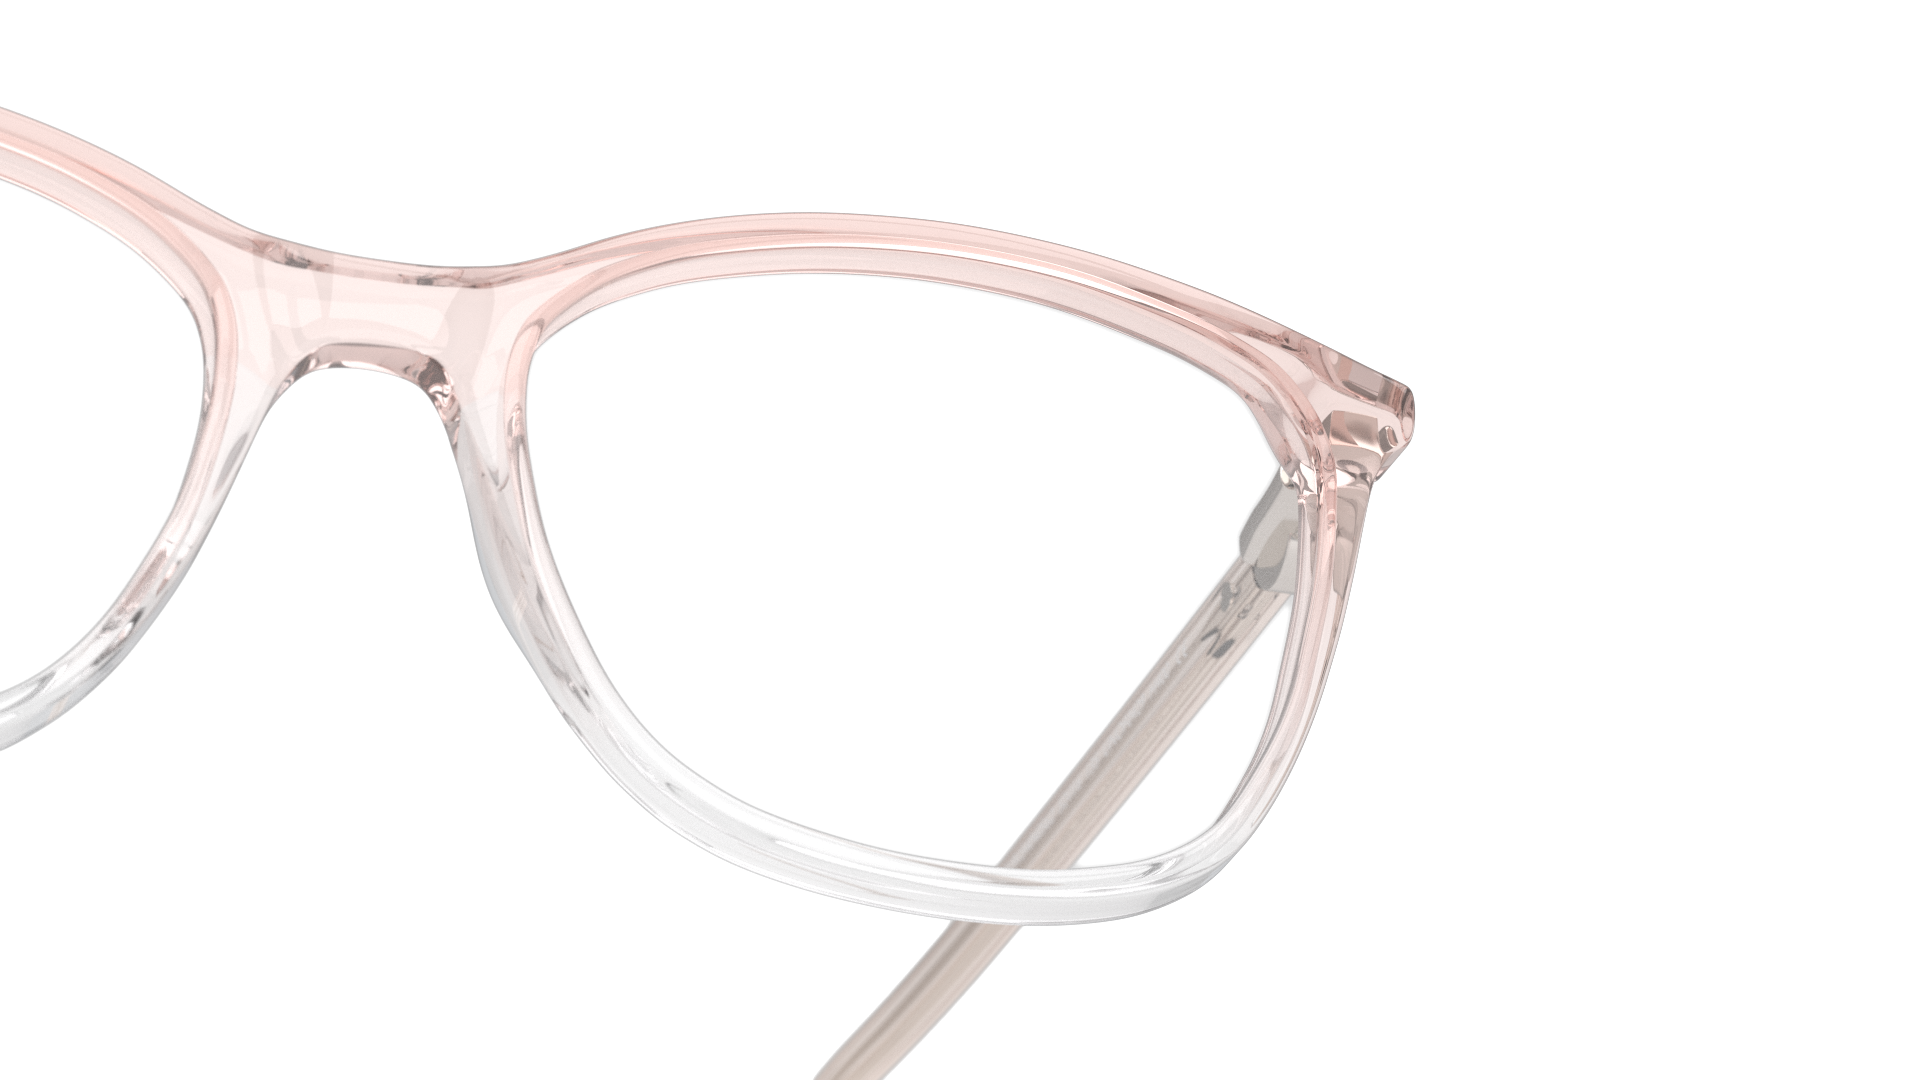 Detail01 Unofficial UNOF0429 Glasses Transparent / Transparent, Pink